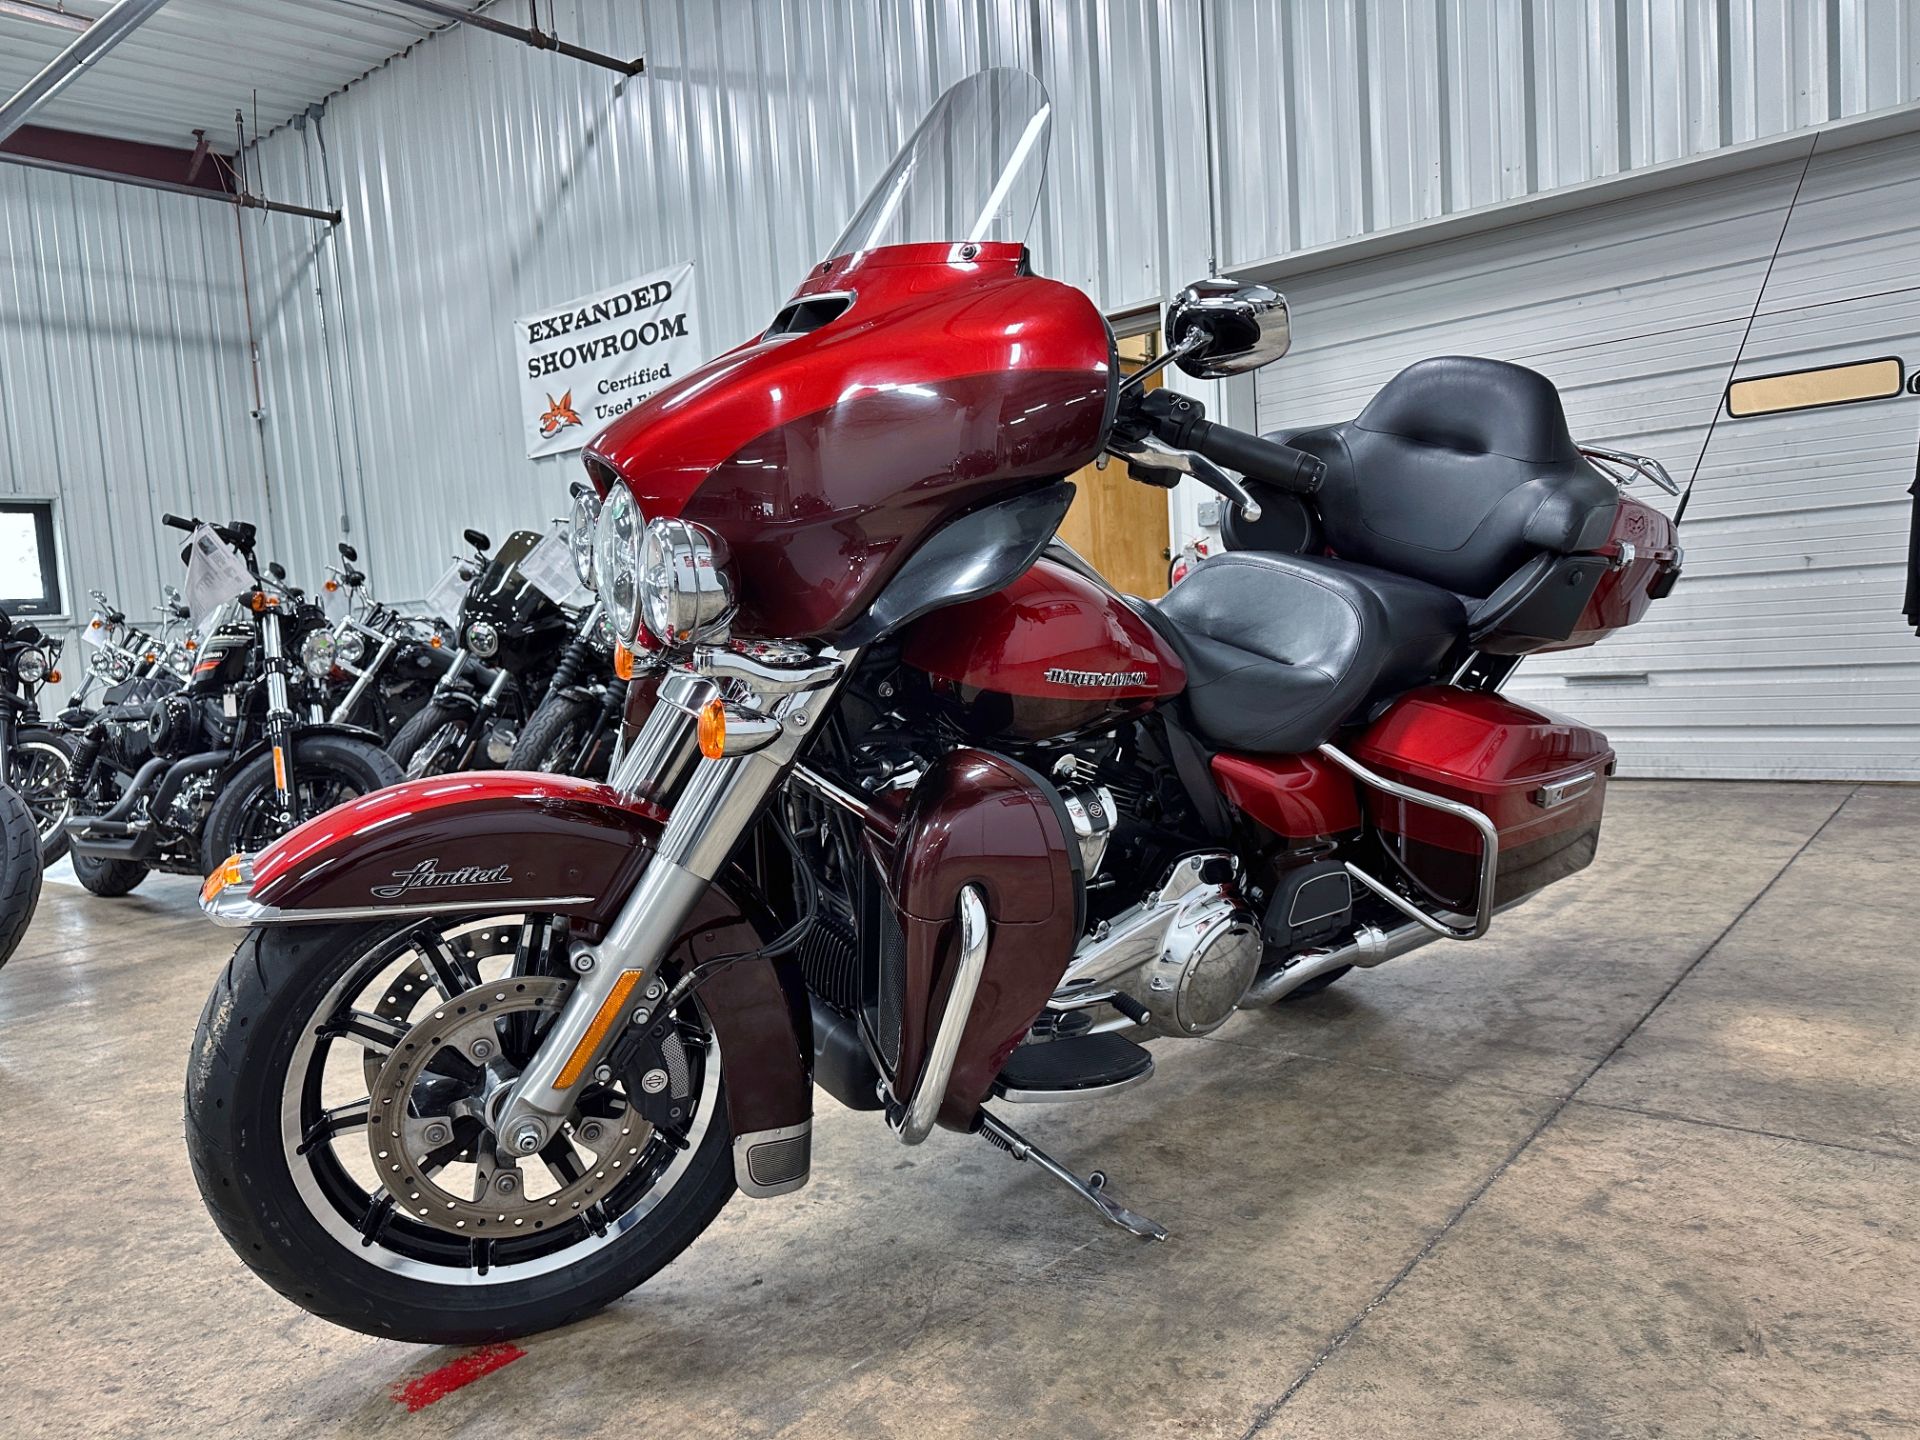 2018 Harley-Davidson Ultra Limited in Sandusky, Ohio - Photo 5